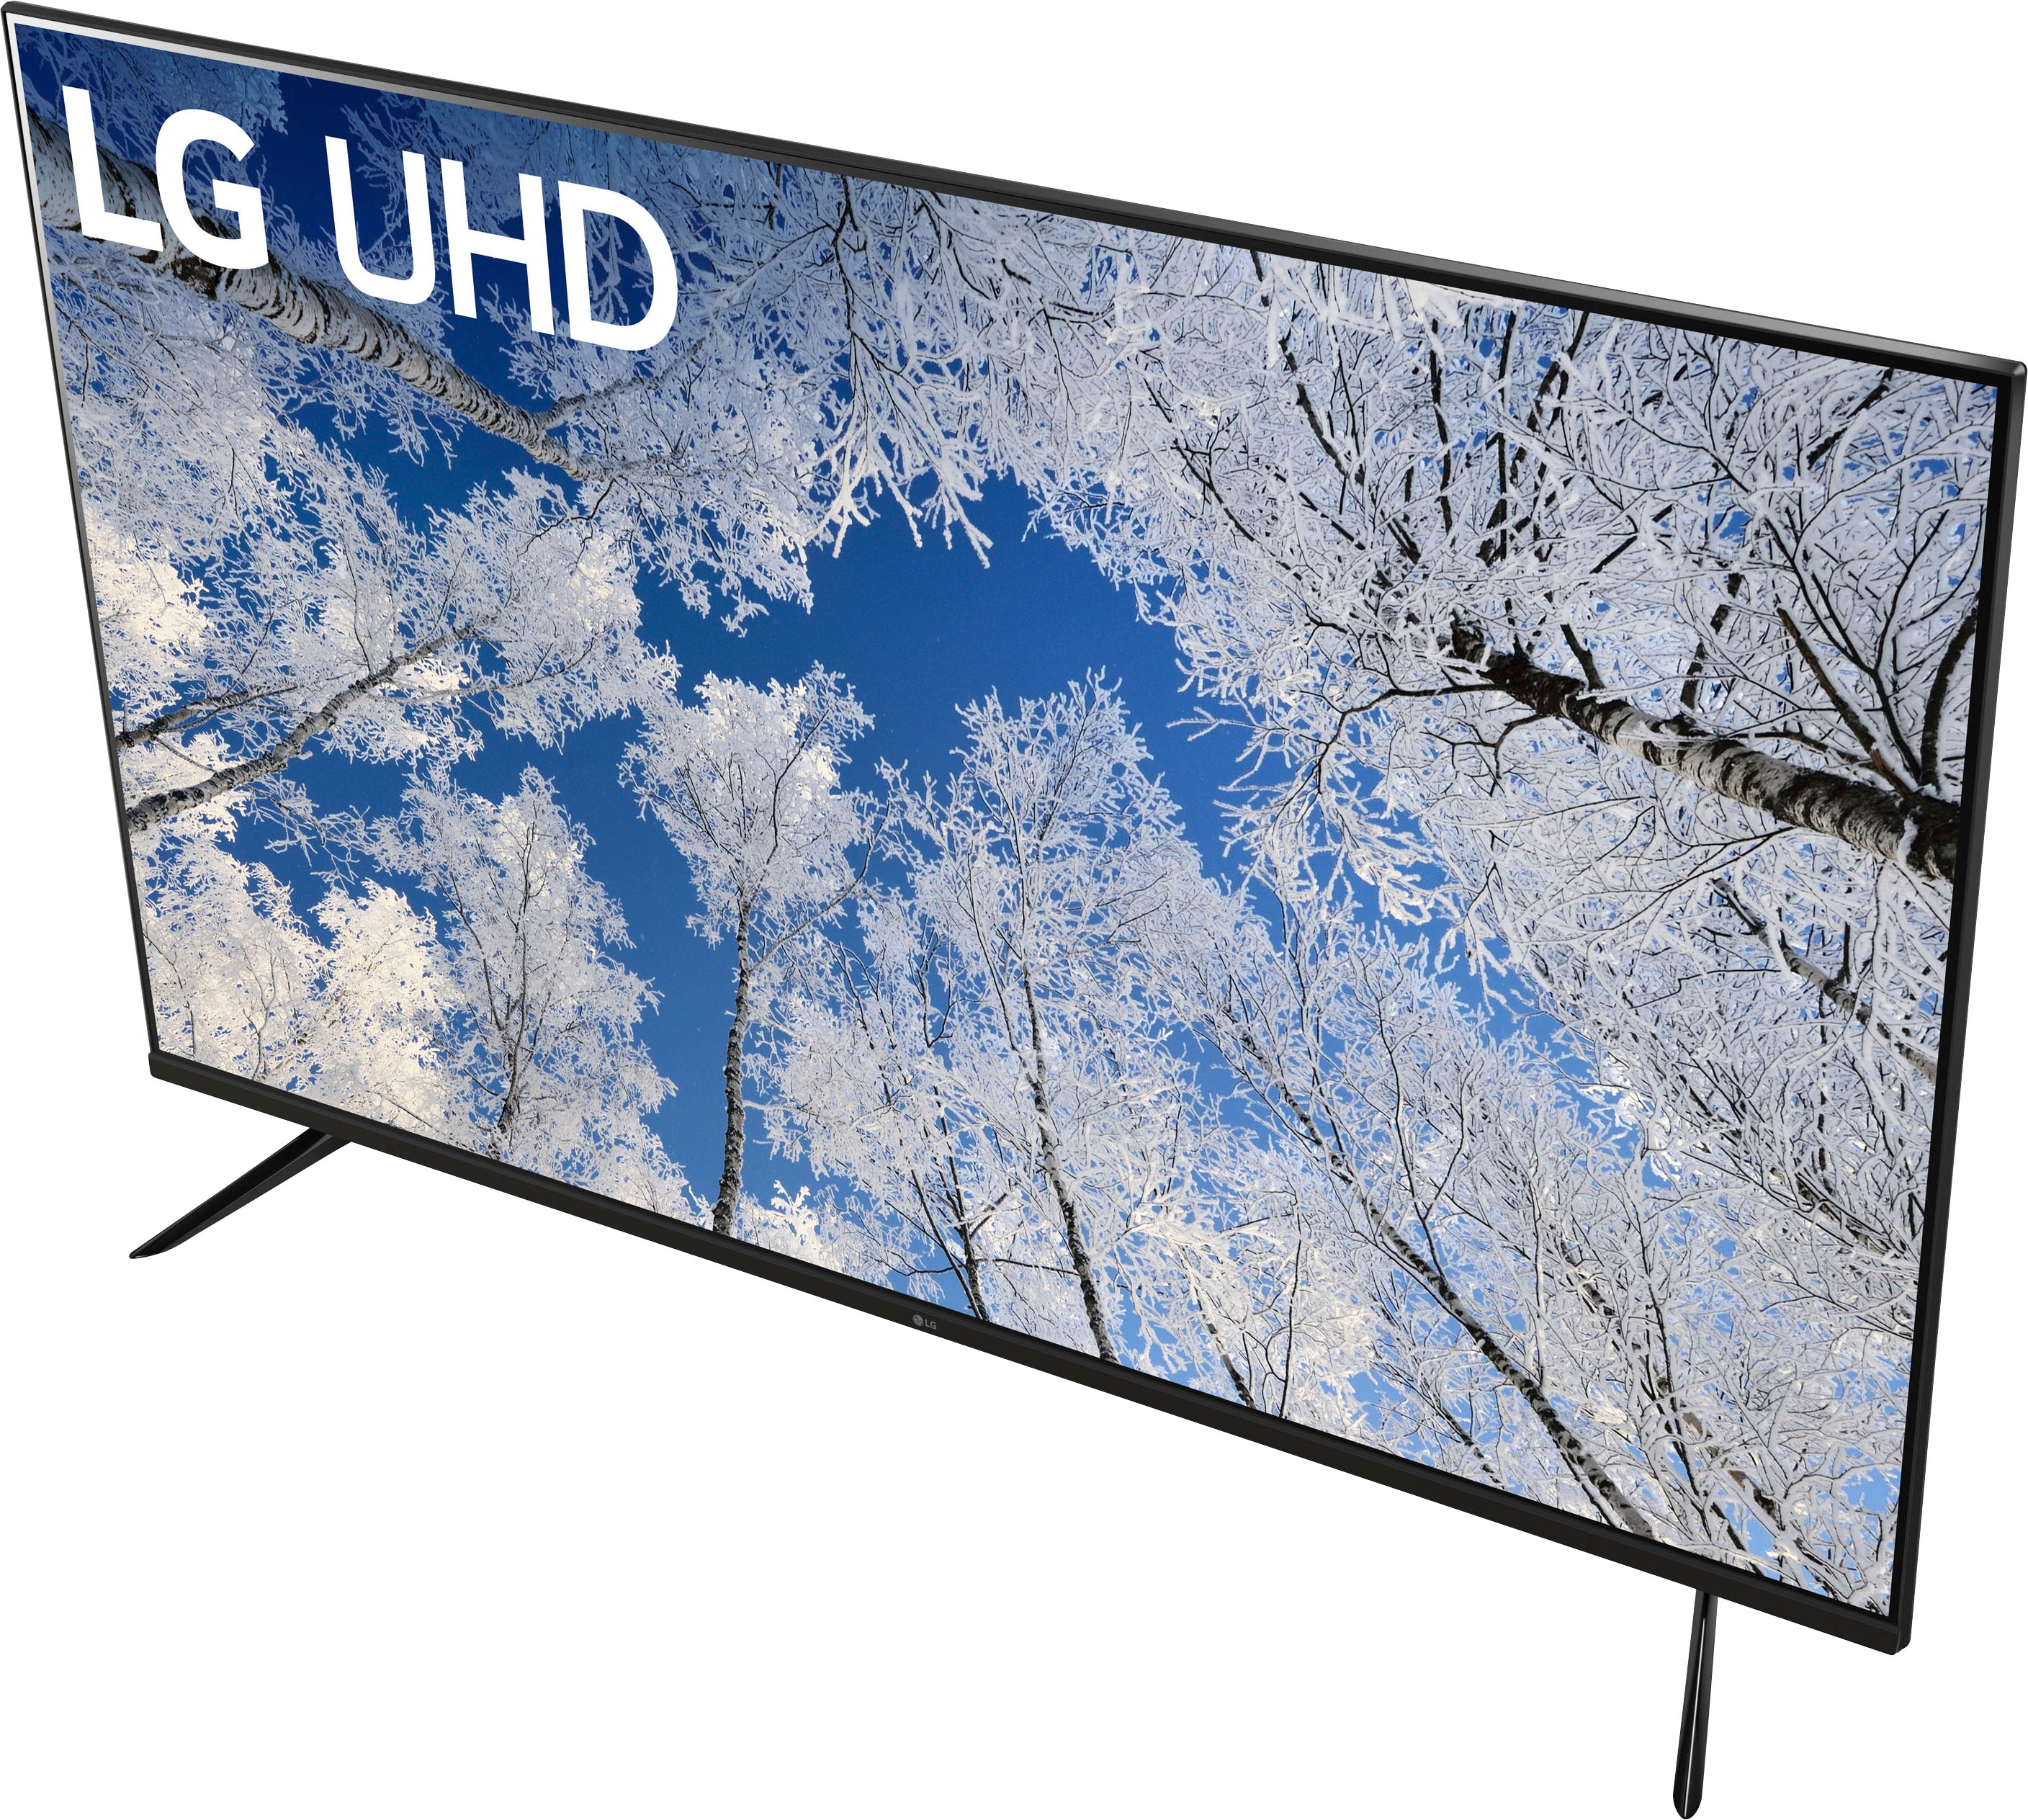 LG 55 Class 4K UHD 2160P WebOS Smart TV with Active HDR UQ7570 Series  55UQ7570PUJ